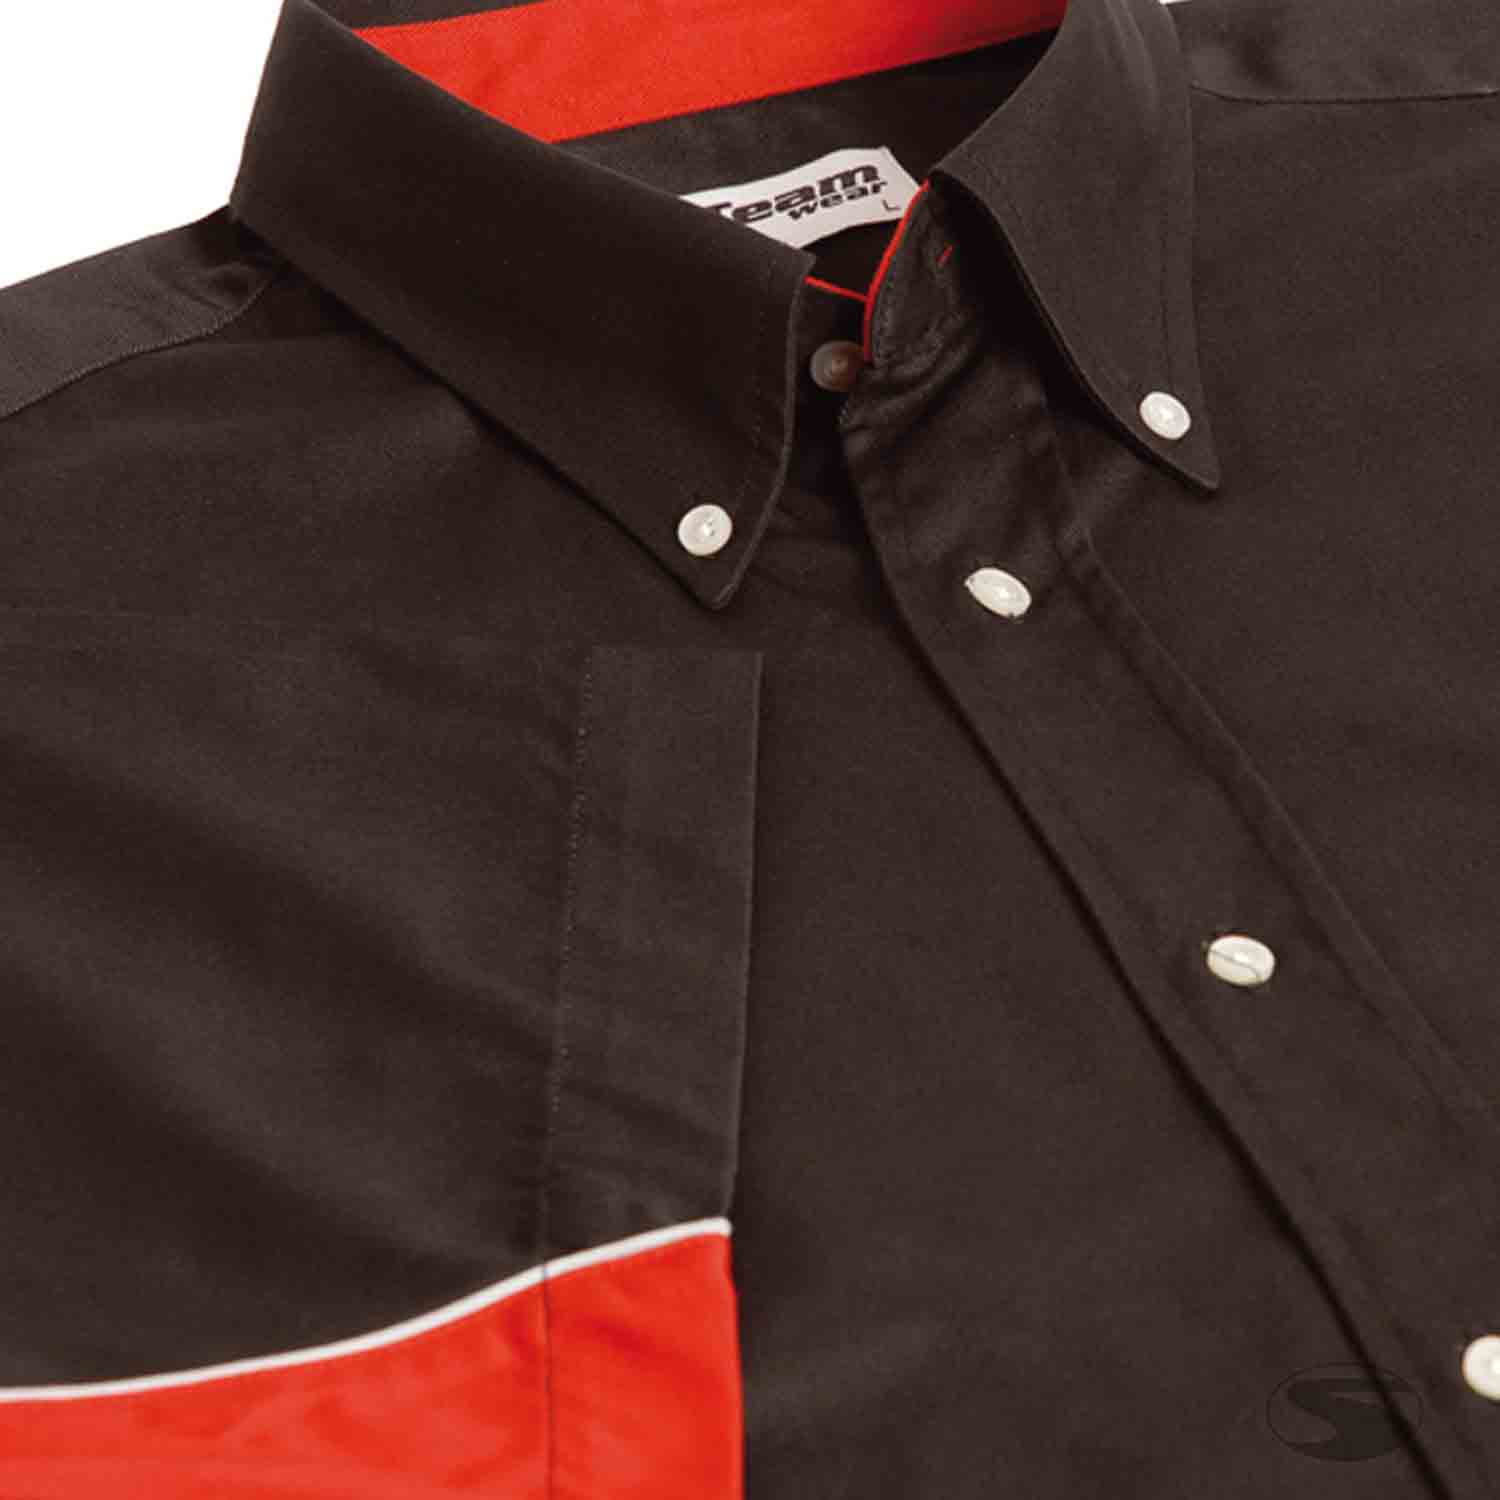 Teamwear Kurzarm Hemd, schwarz/rot